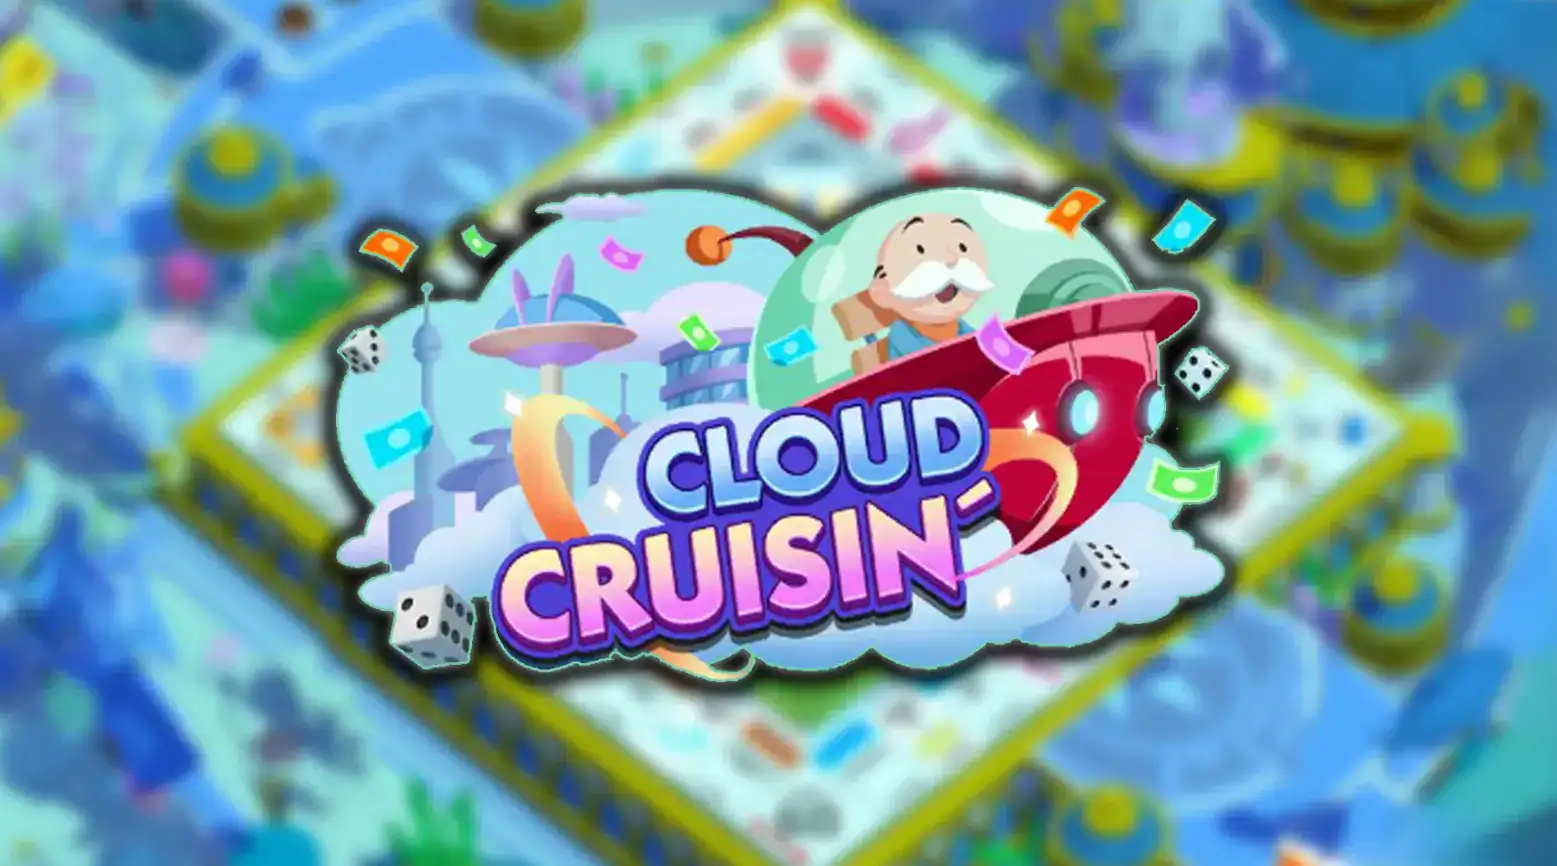 monopoly go cloud cruisin rewards and milestones